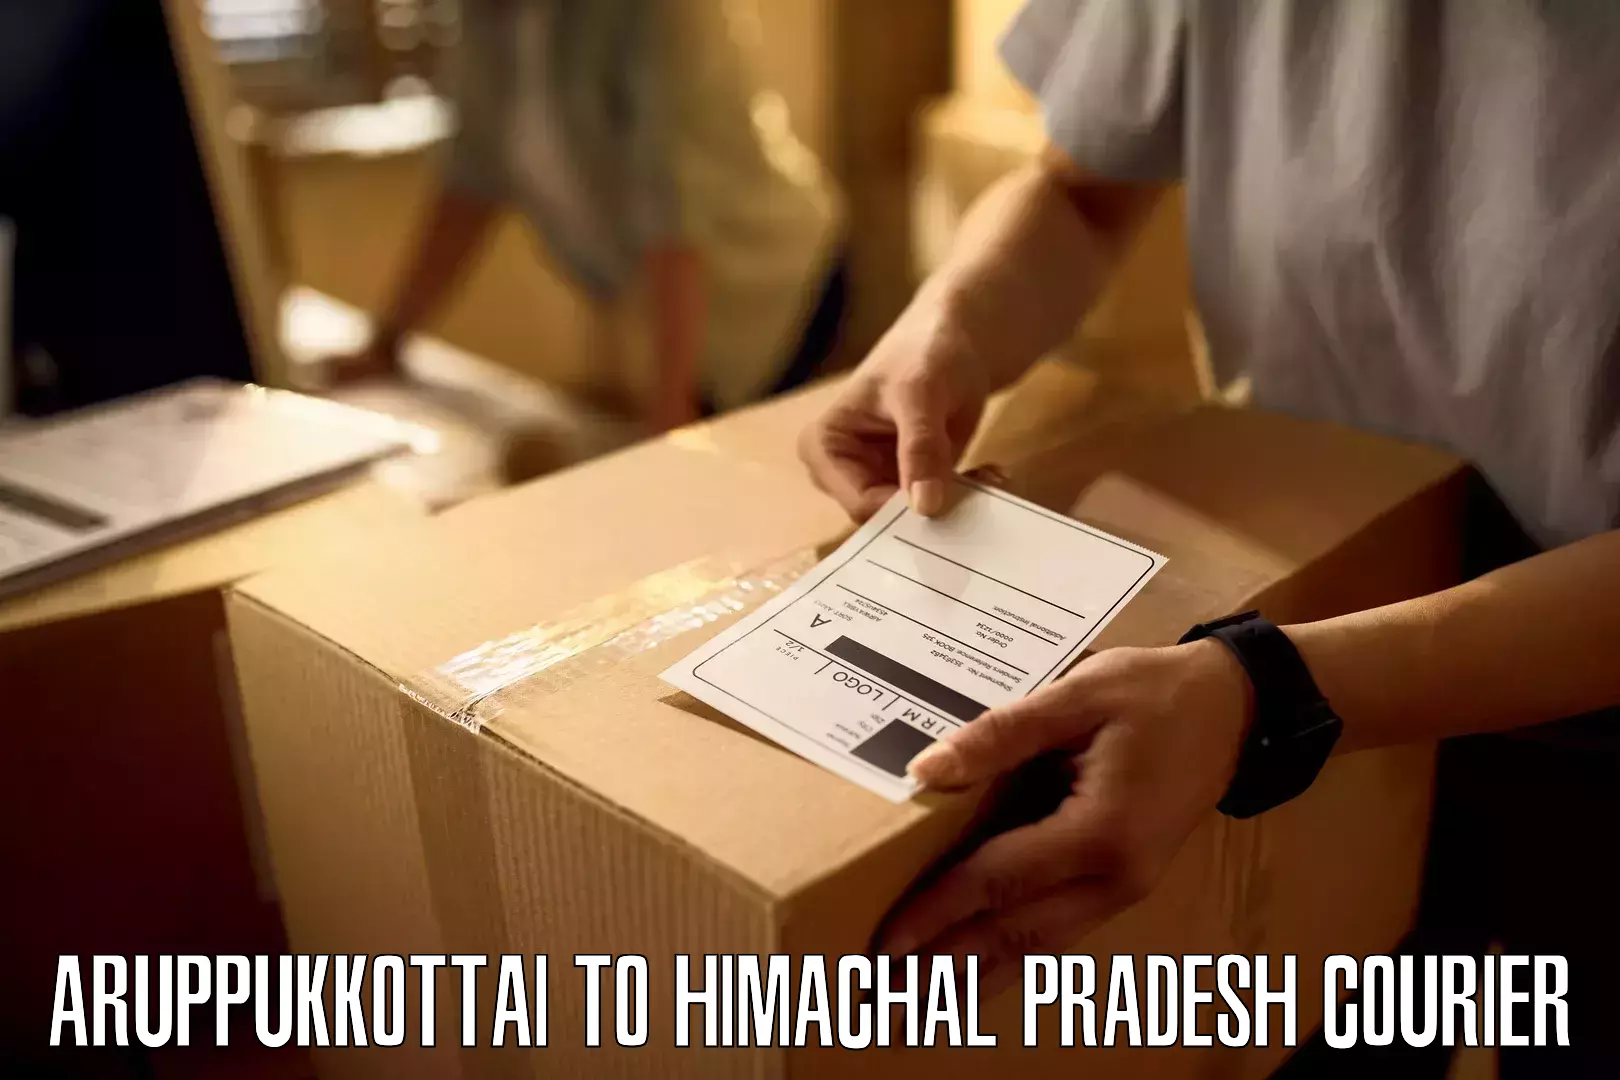 Global logistics network Aruppukkottai to Himachal Pradesh